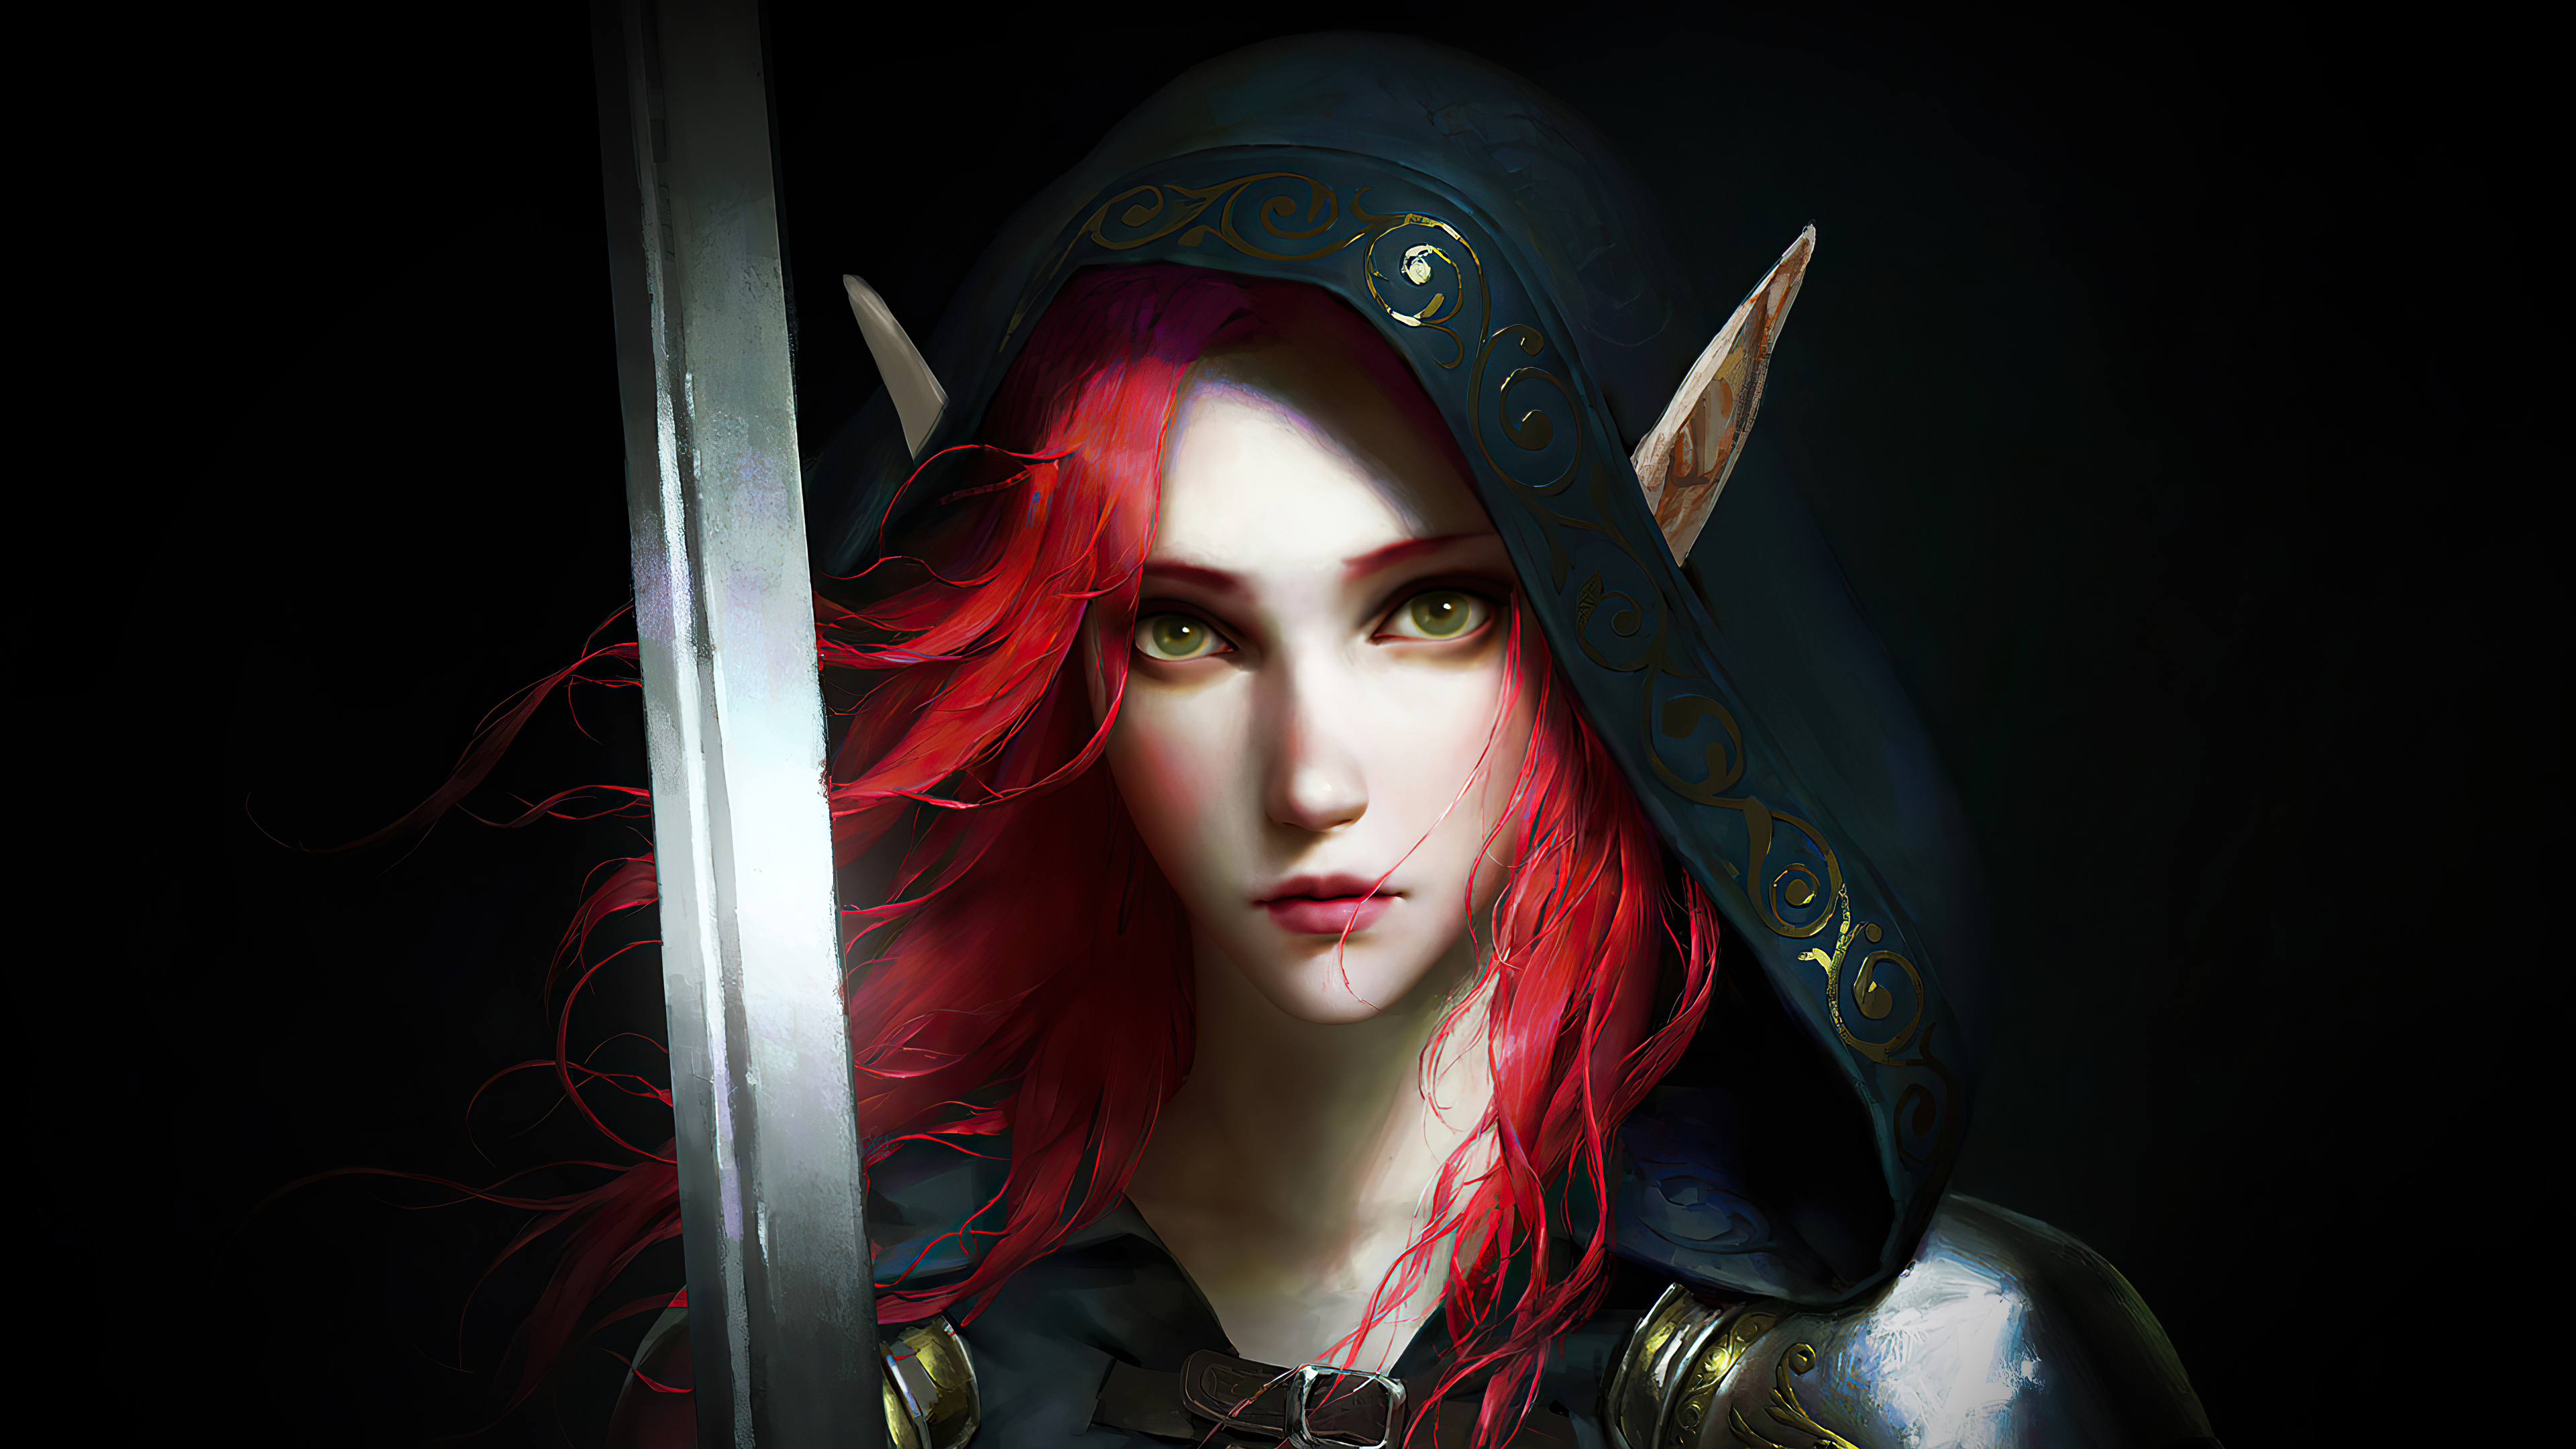 Download Red Hair Hood Pointed Ears Woman Warrior Sword Fantasy Elf 4k Ultra Hd Wallpaper By Gantzu 5630